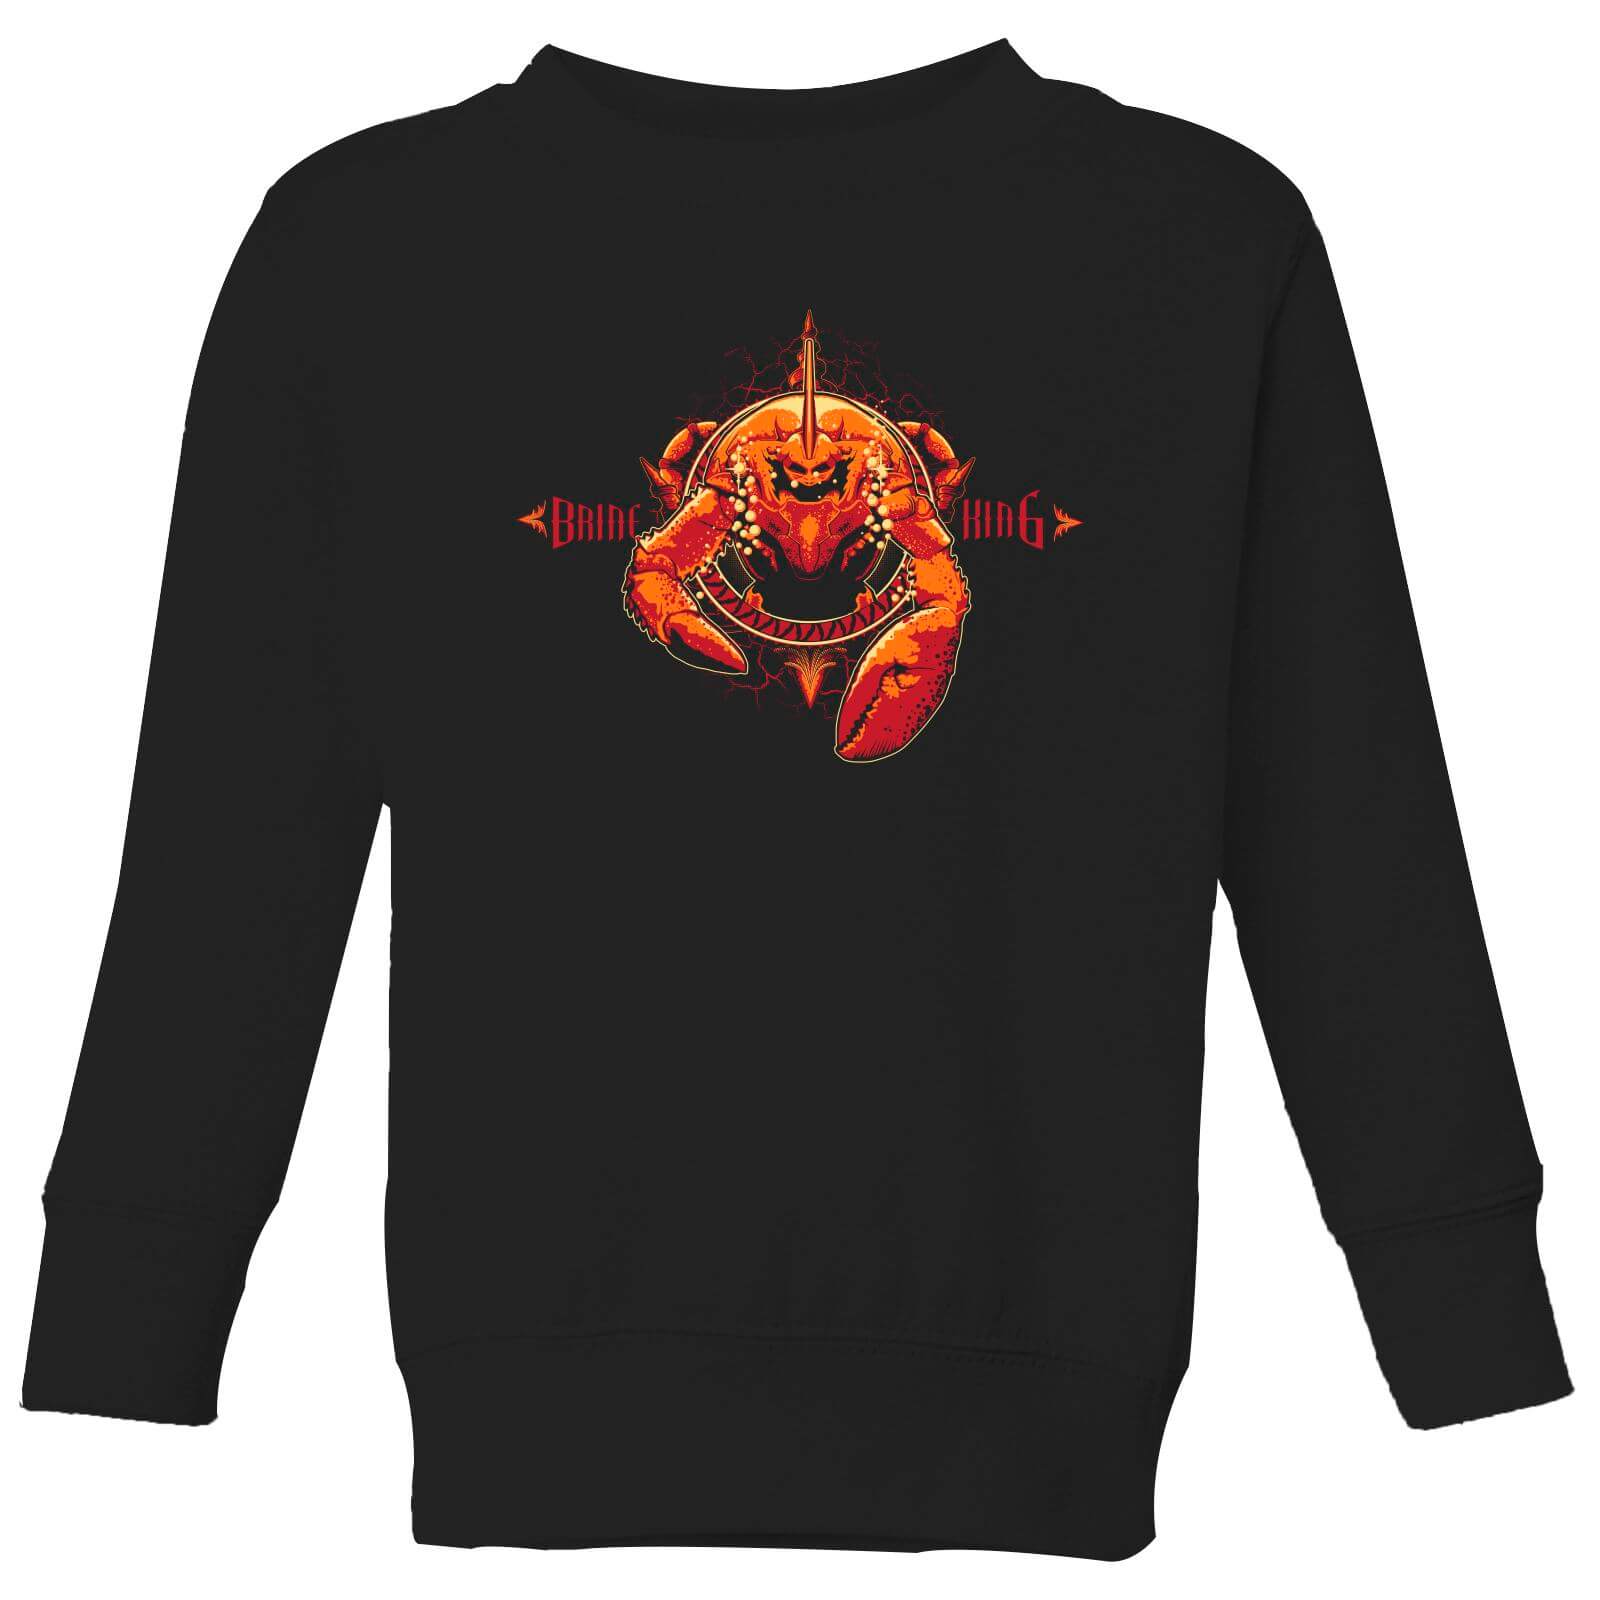 Aquaman Brine King Kids' Sweatshirt - Black - 3-4 ans - Noir